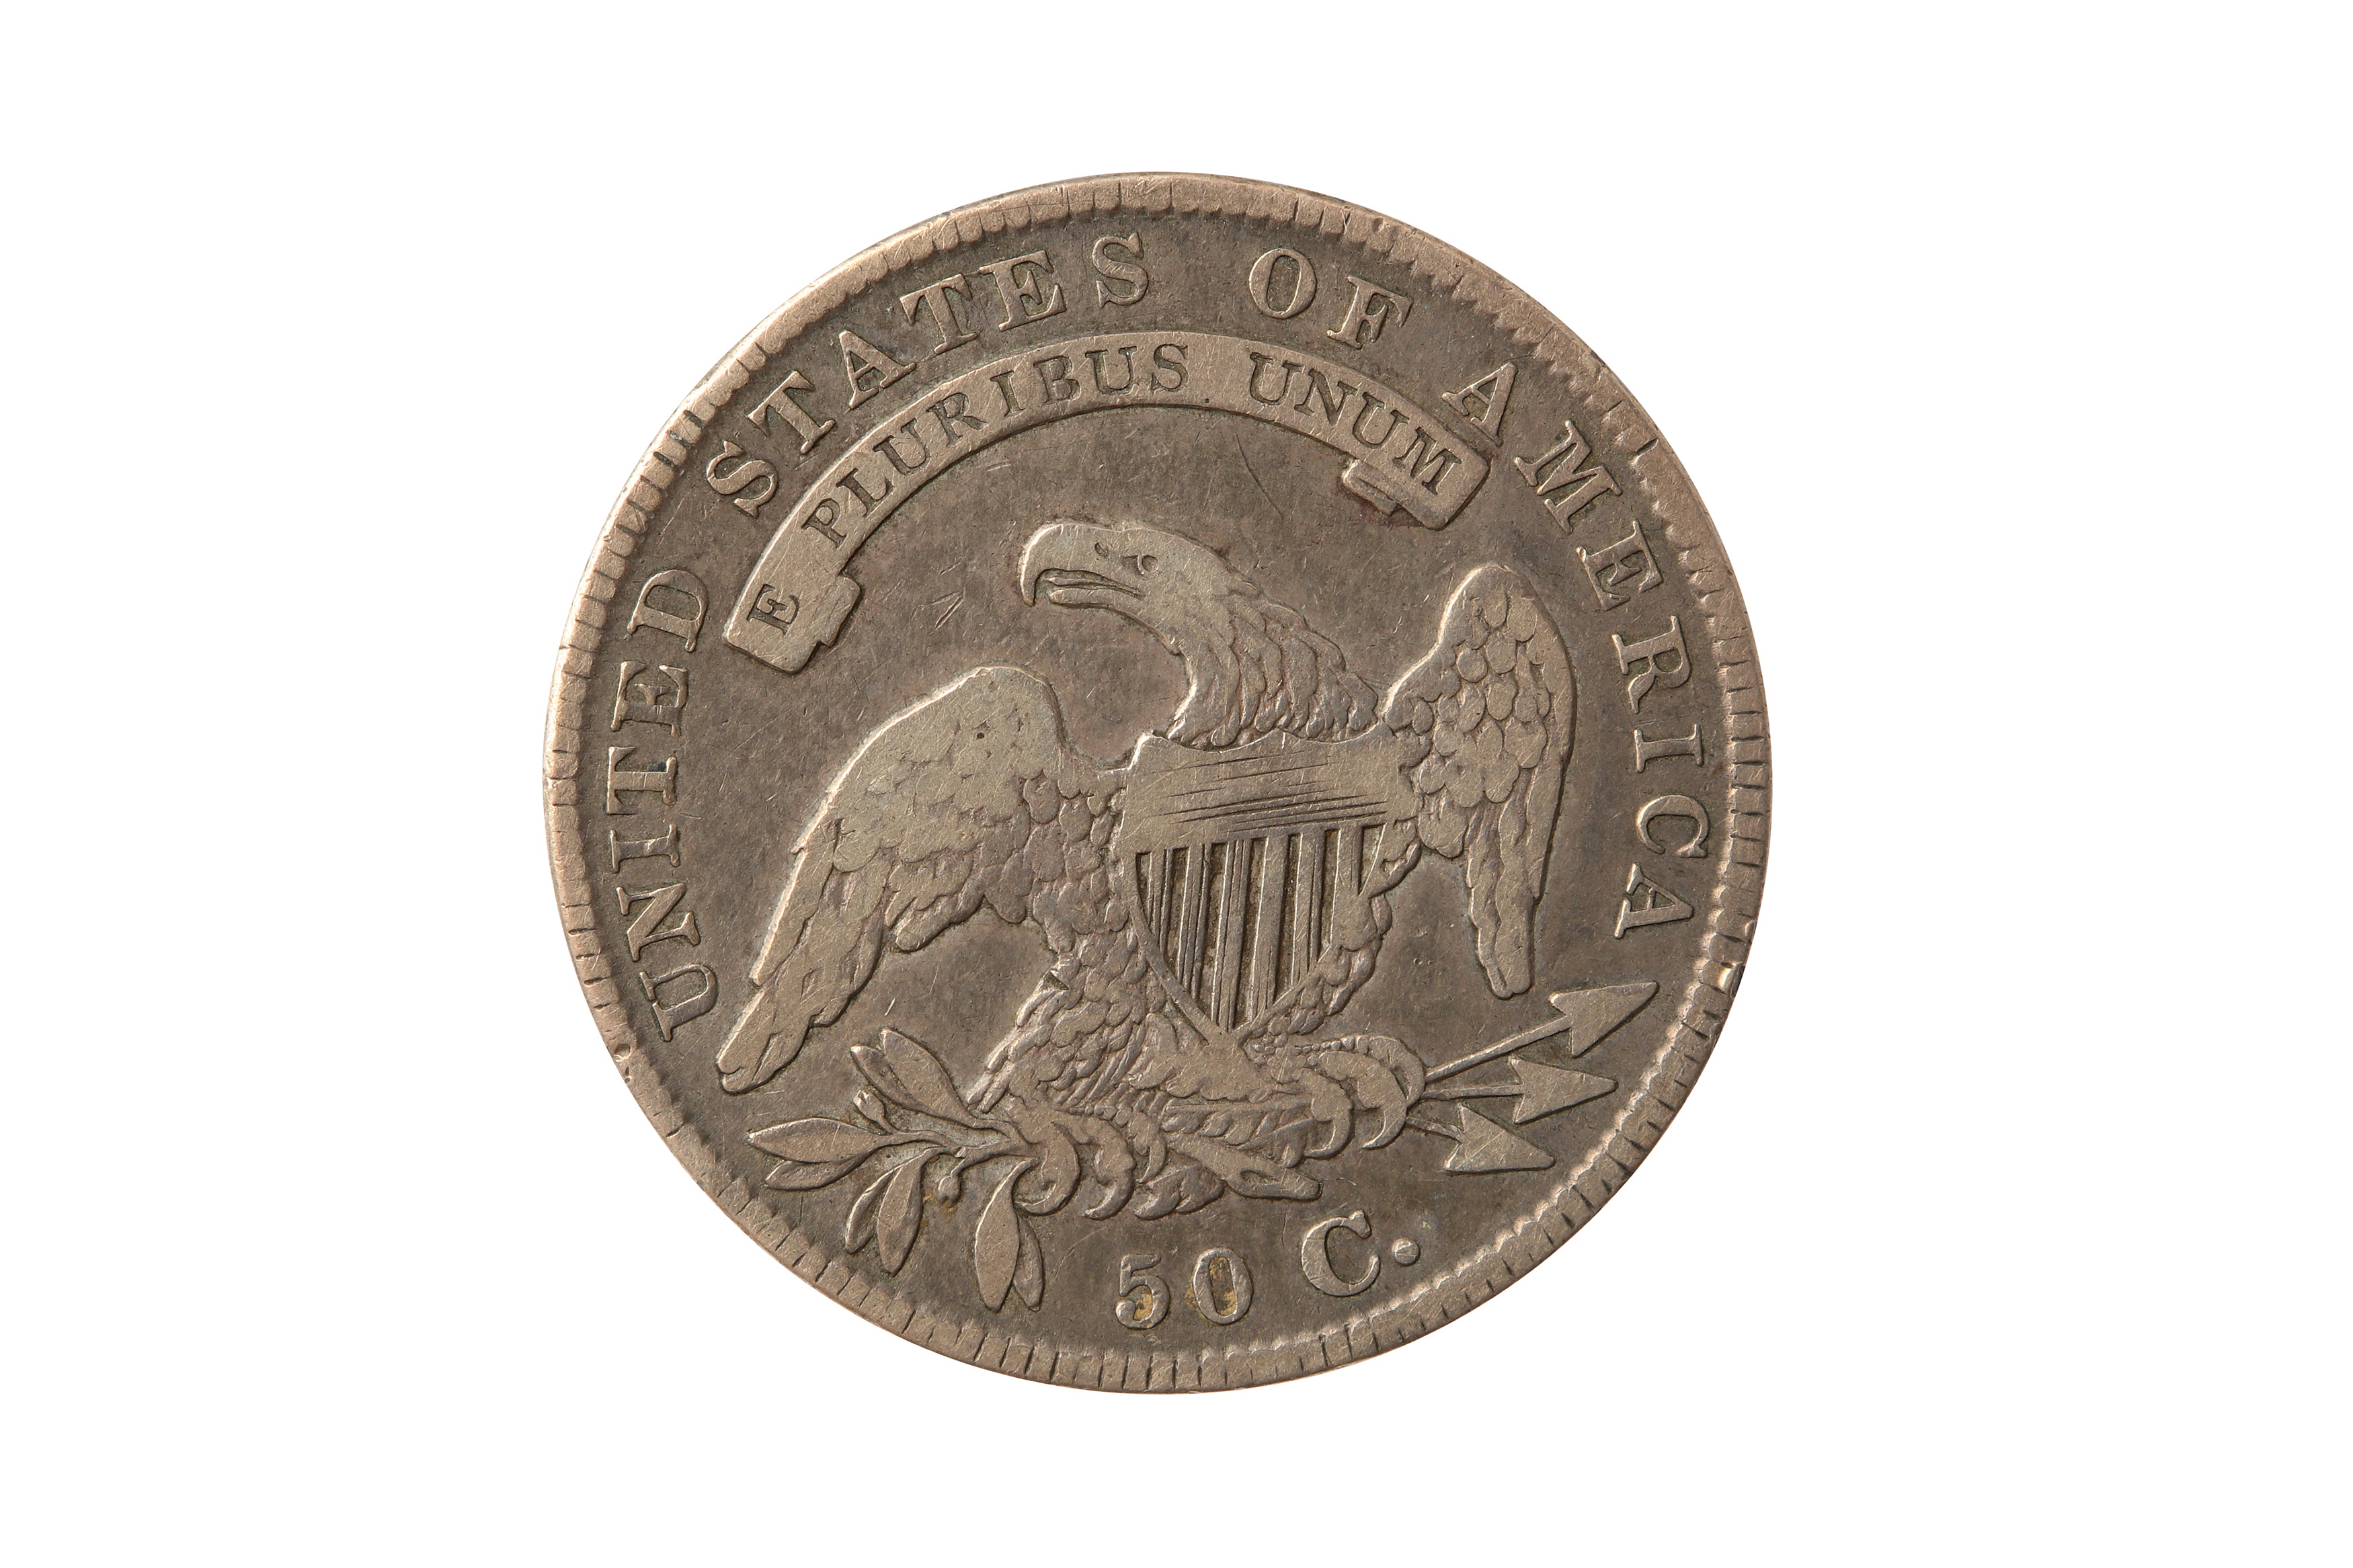 USA, 1834 50 CENTS/HALF DOLLAR. - Image 2 of 2